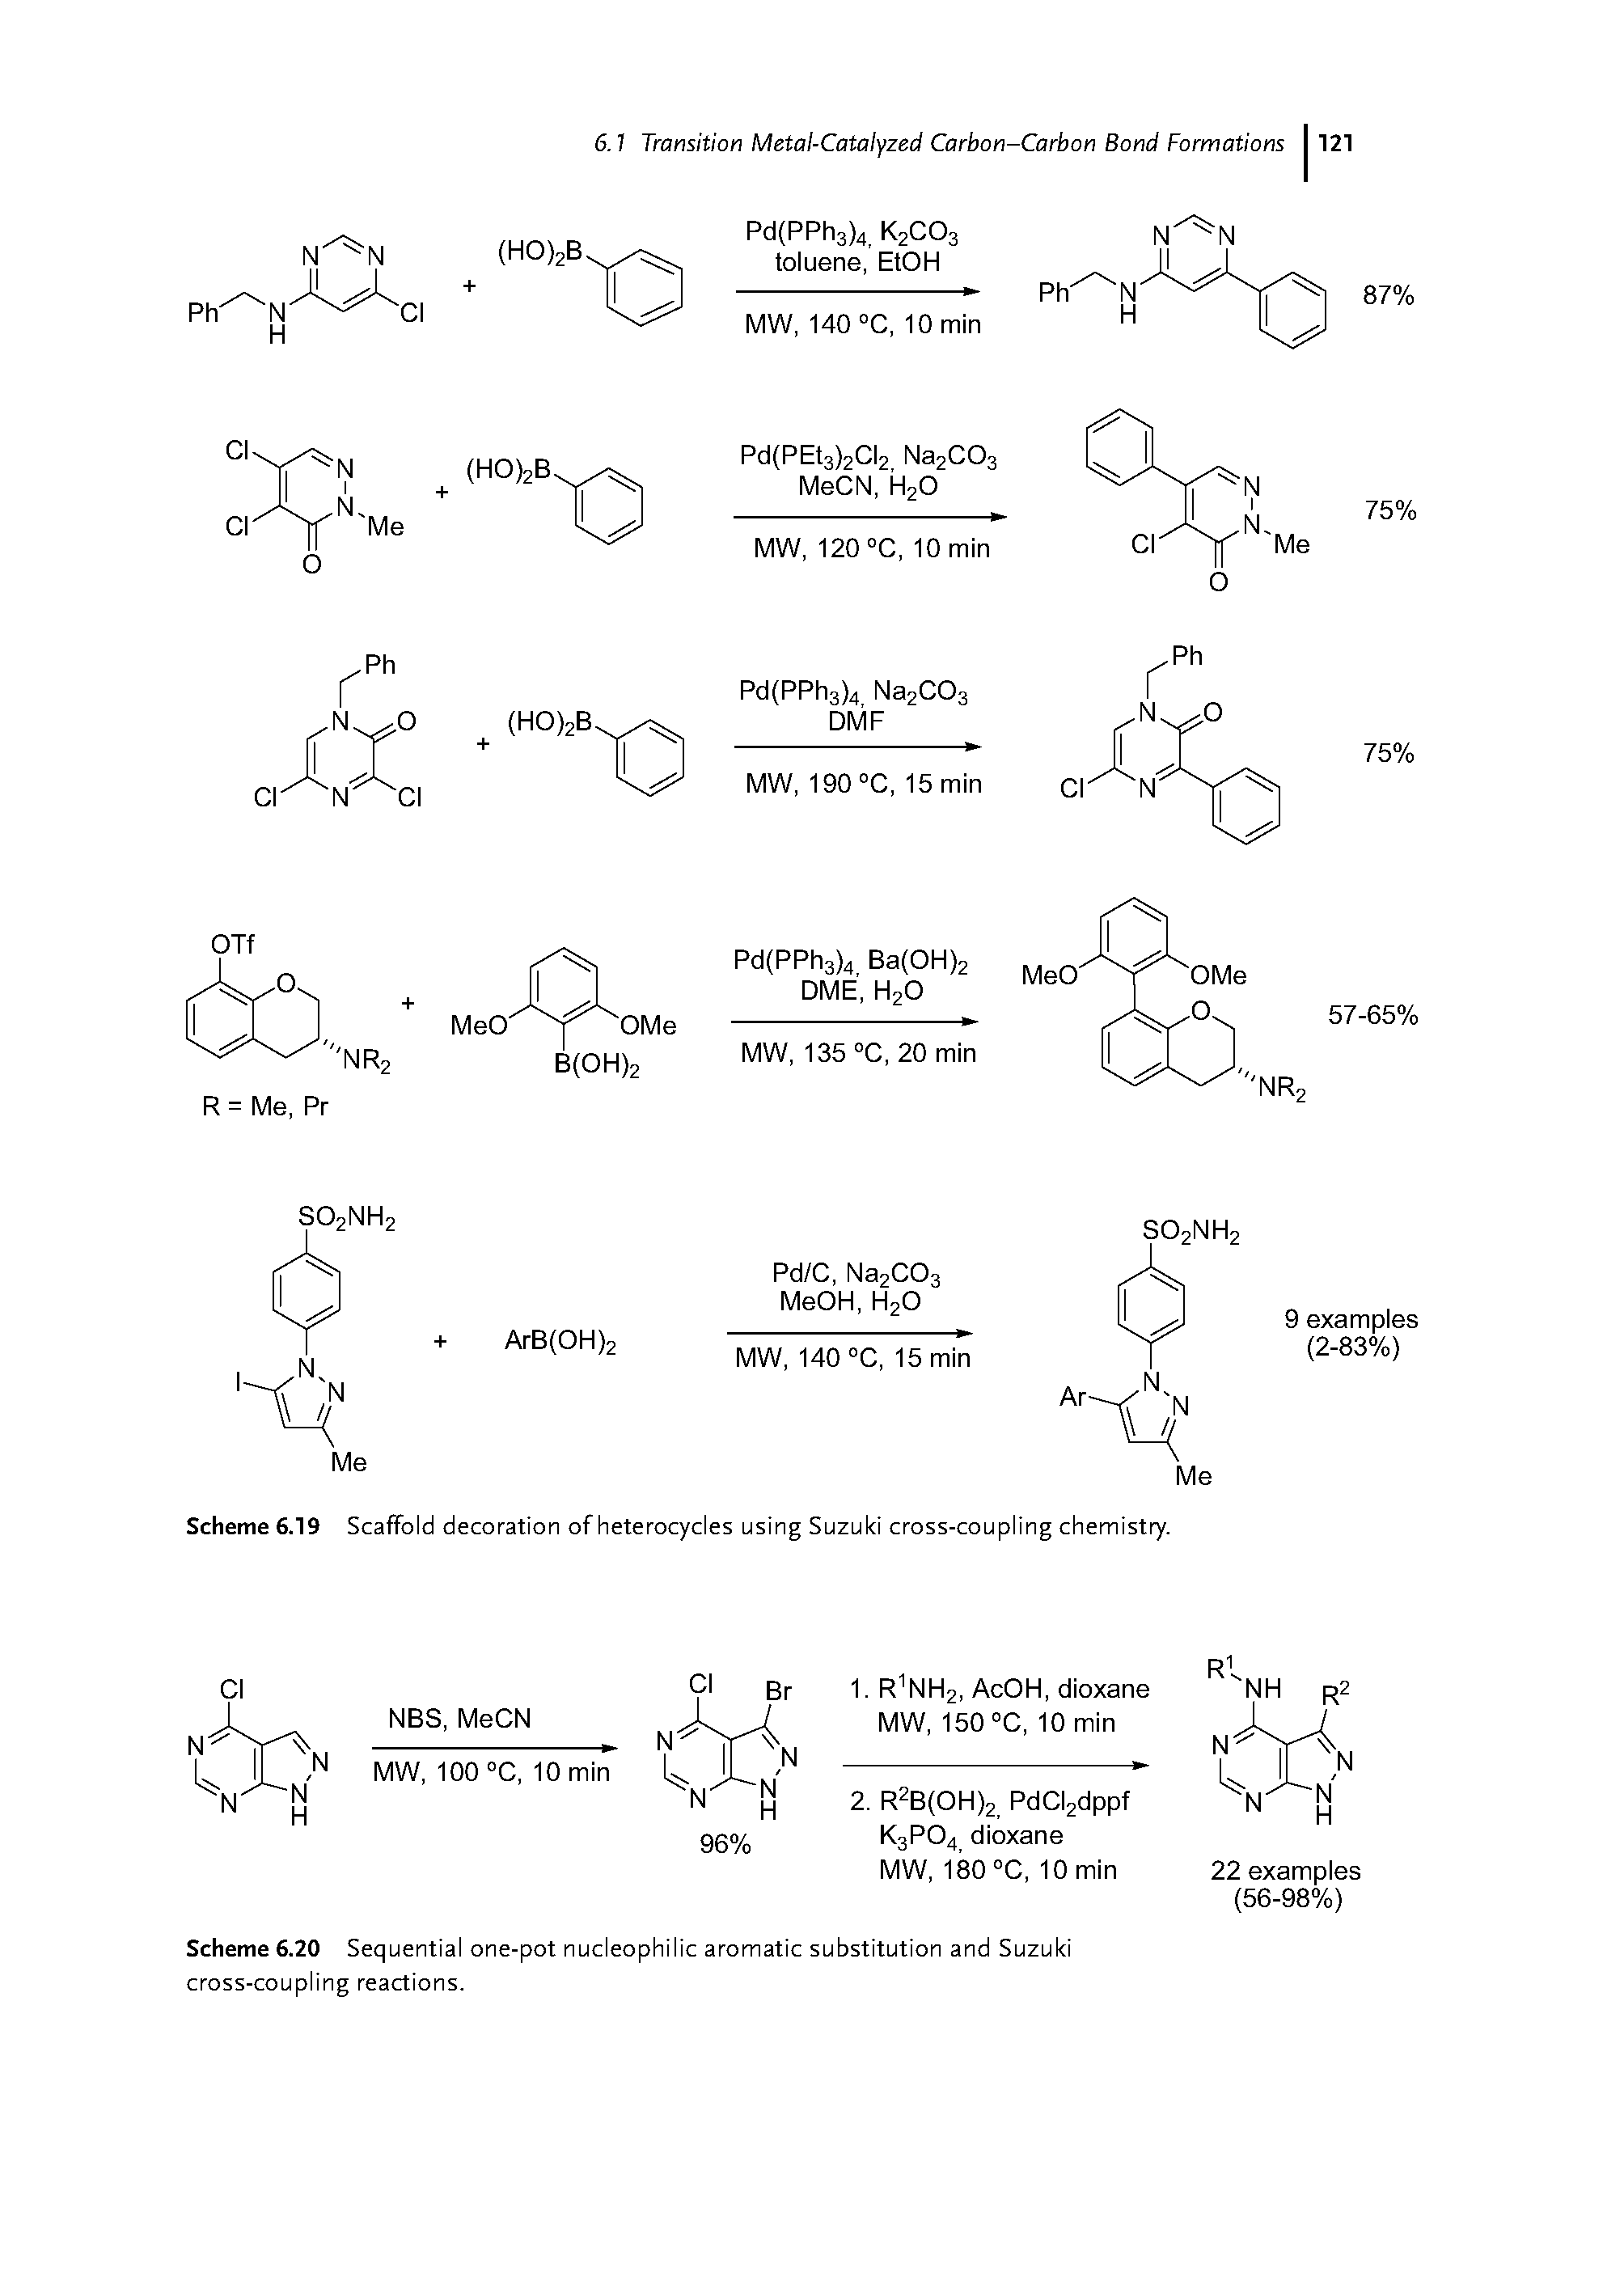 Scheme 6.19 Scaffold decoration of heterocycles using Suzuki cross-coupling chemistry.